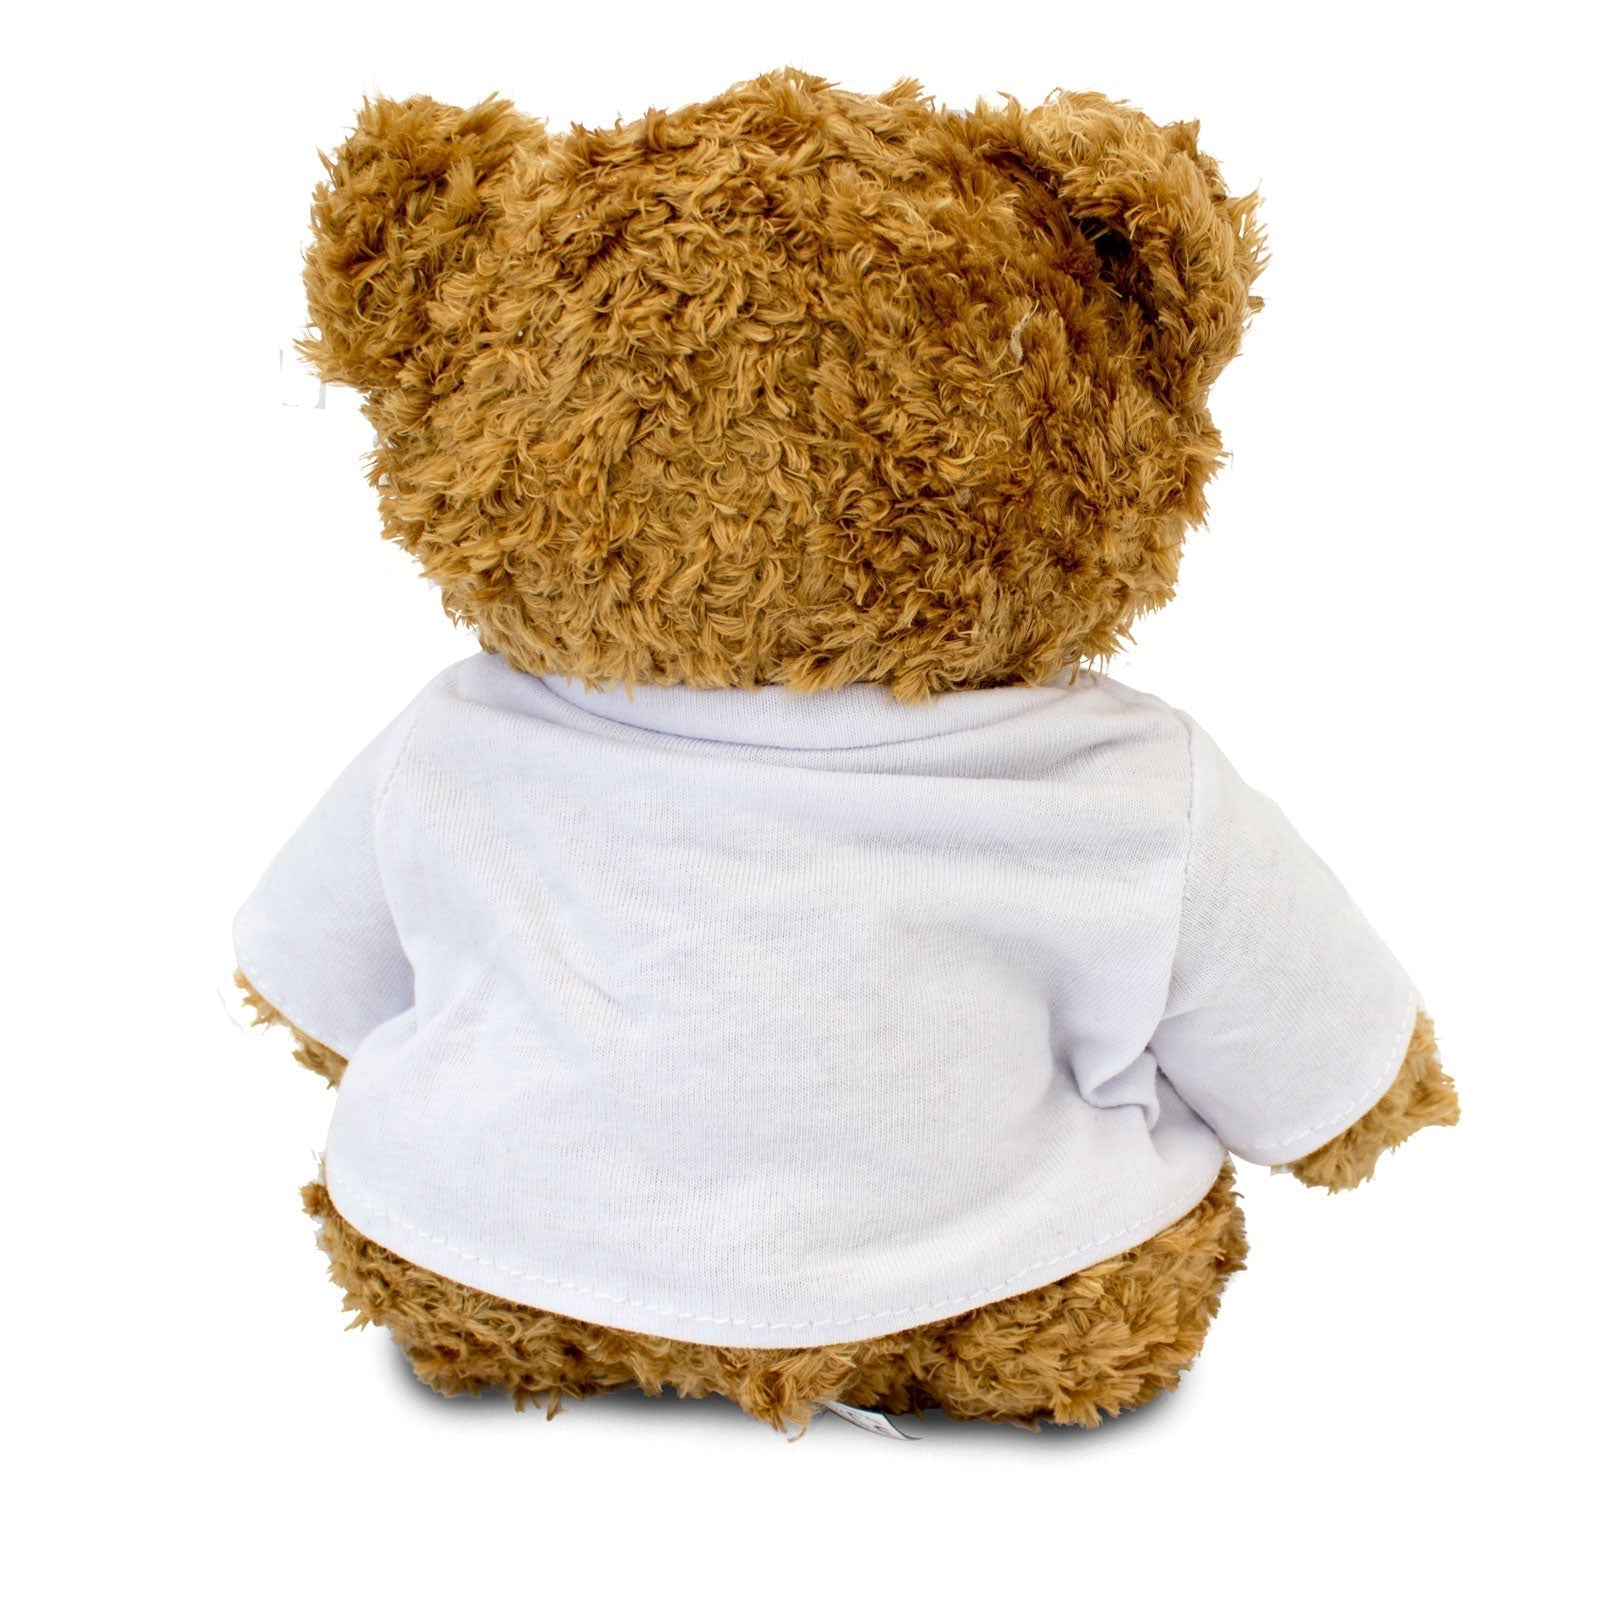 I Love Snuggles - Teddy Bear